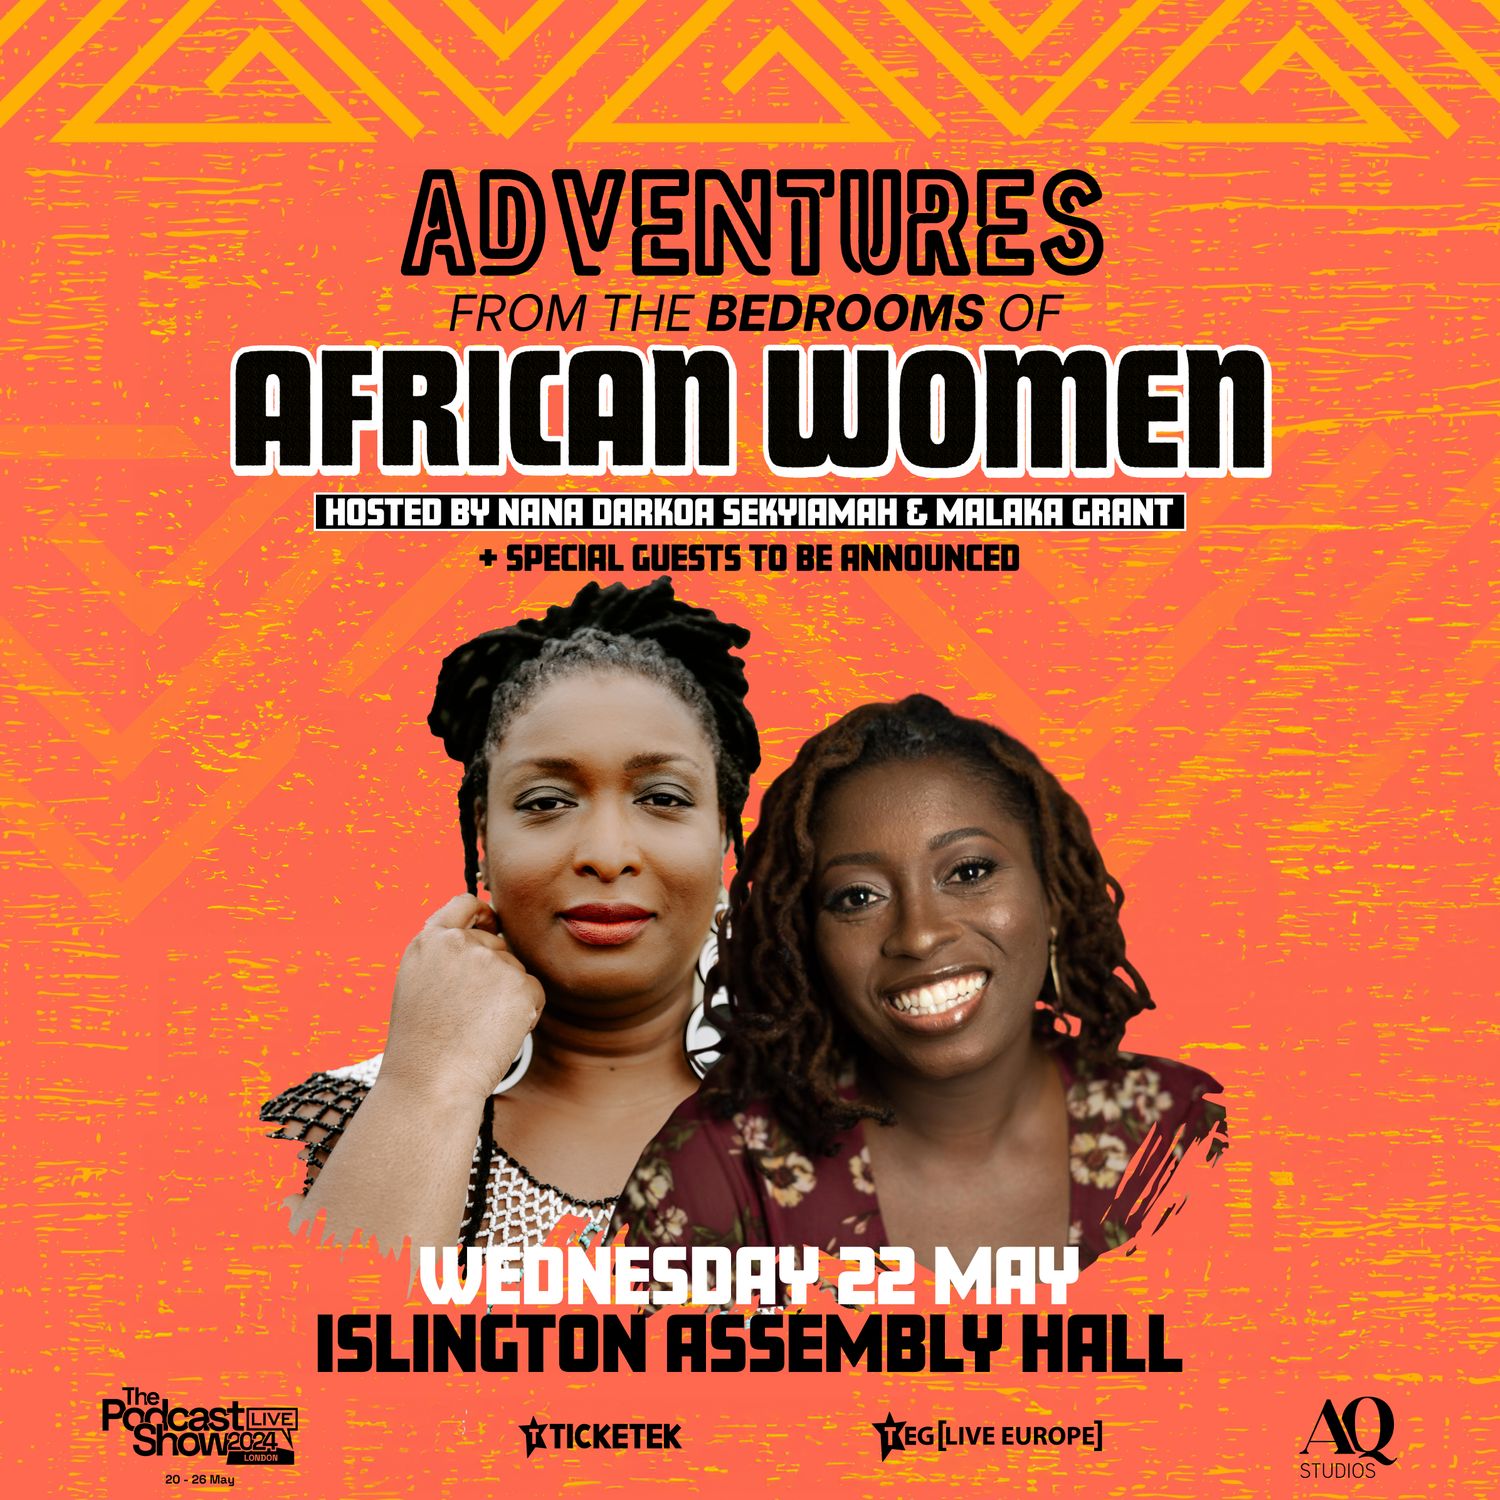 Adventures From the Bedrooms of African Women